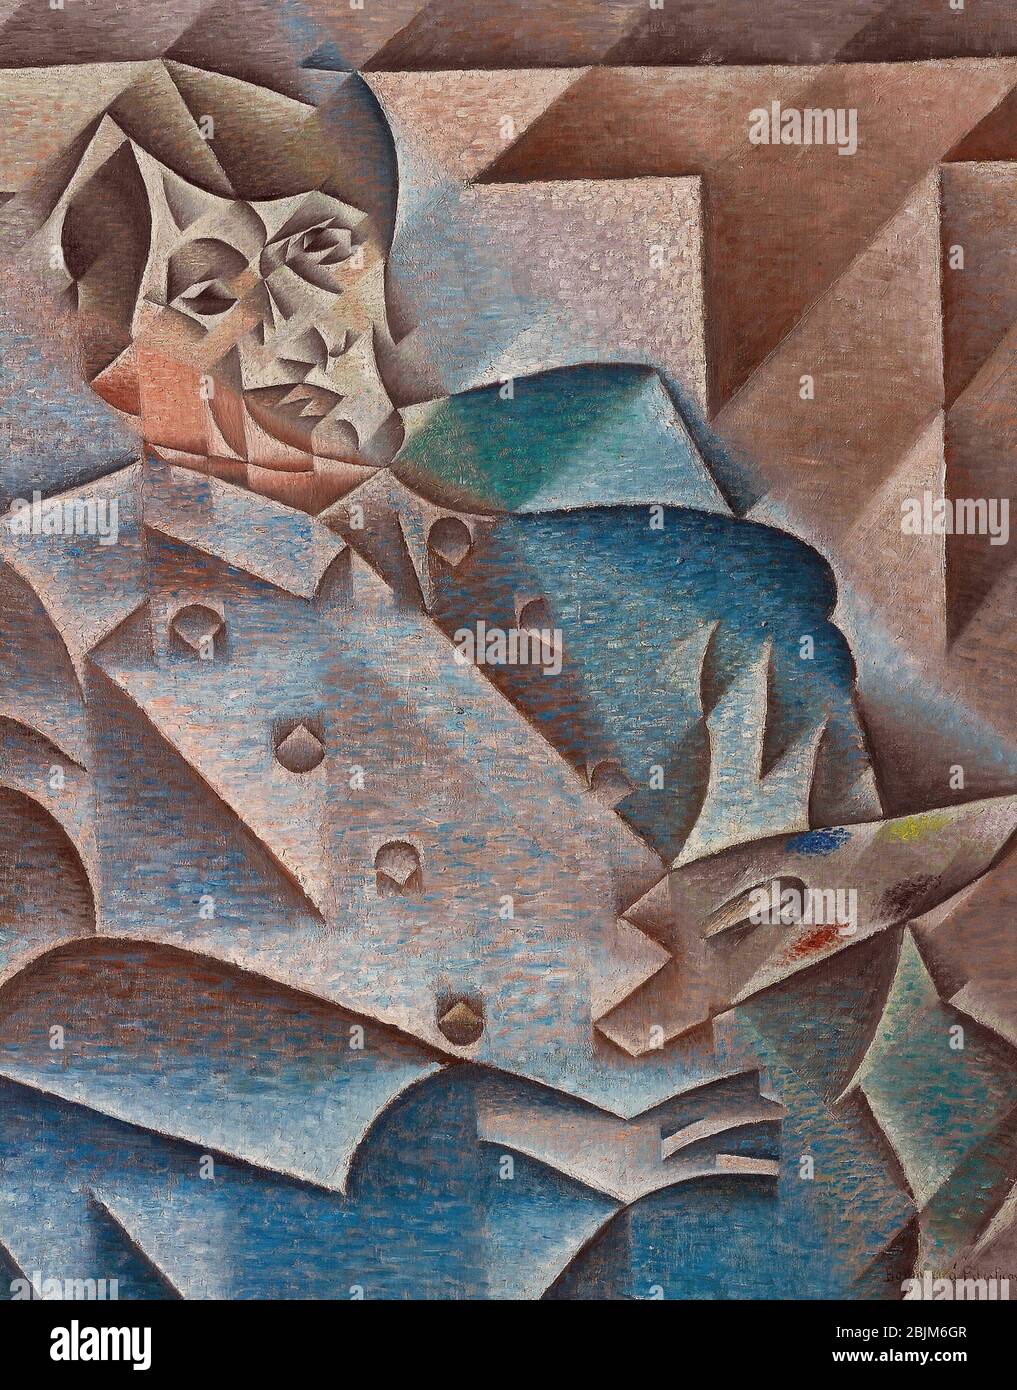 Autor: Juan Gris. Porträt von Pablo Picasso - Januar'Februar 1912 - Juan  Gris Spanisch, 1887'1927. Öl auf Leinwand. Spanien Stockfotografie - Alamy